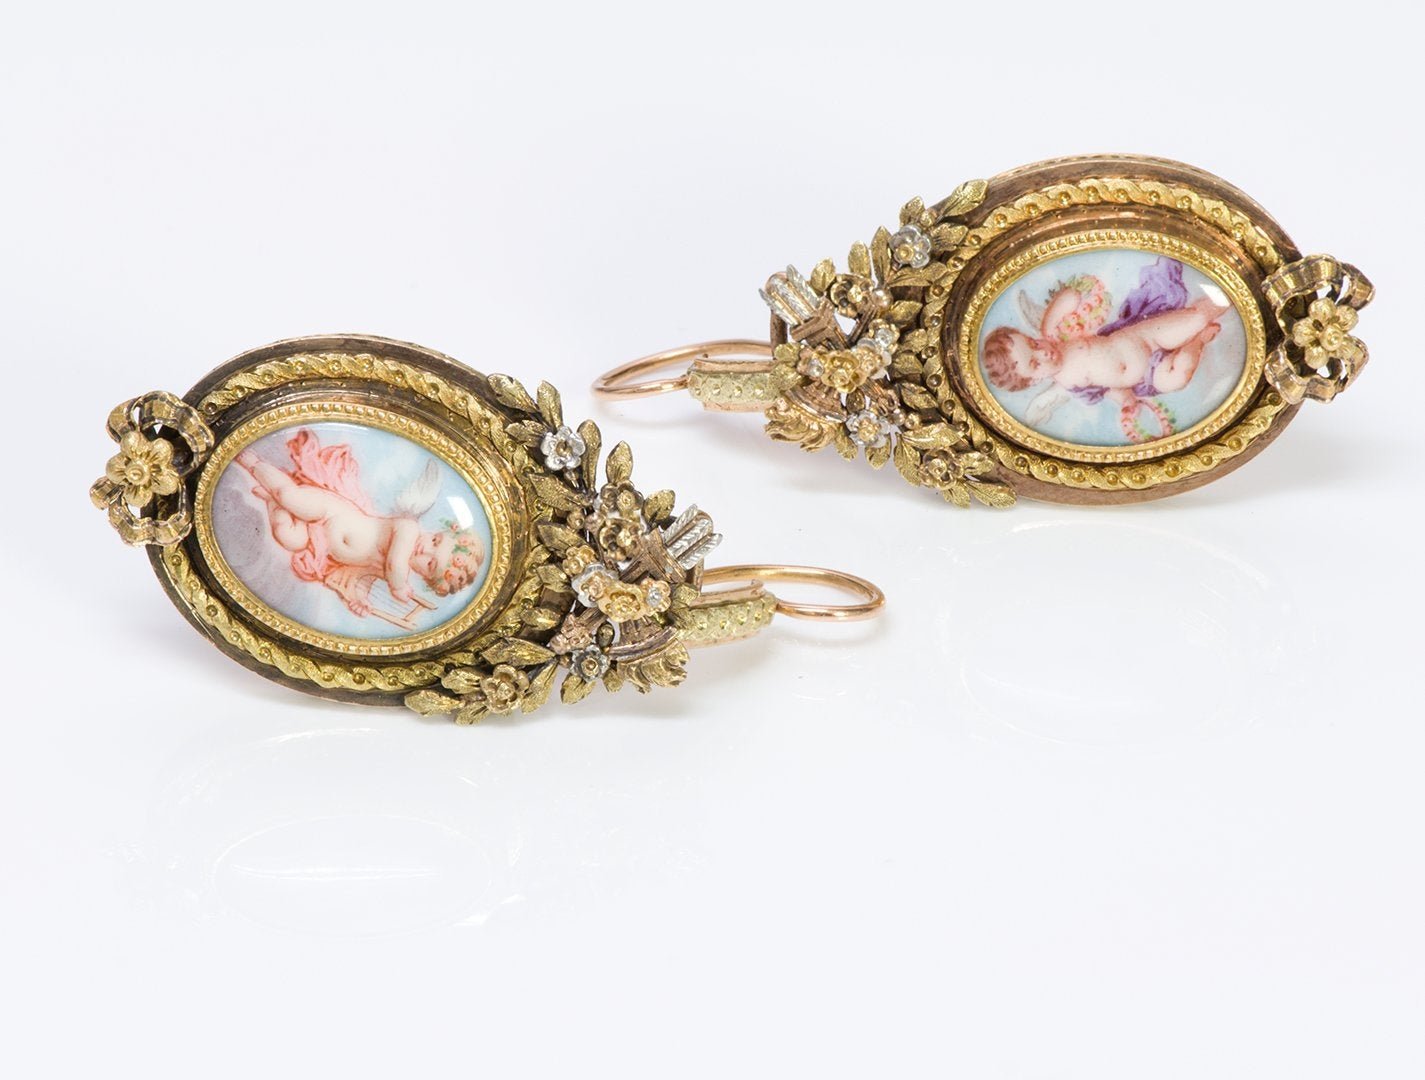 Antique French Gold Cupids Enamel Earrings Pendant Brooch